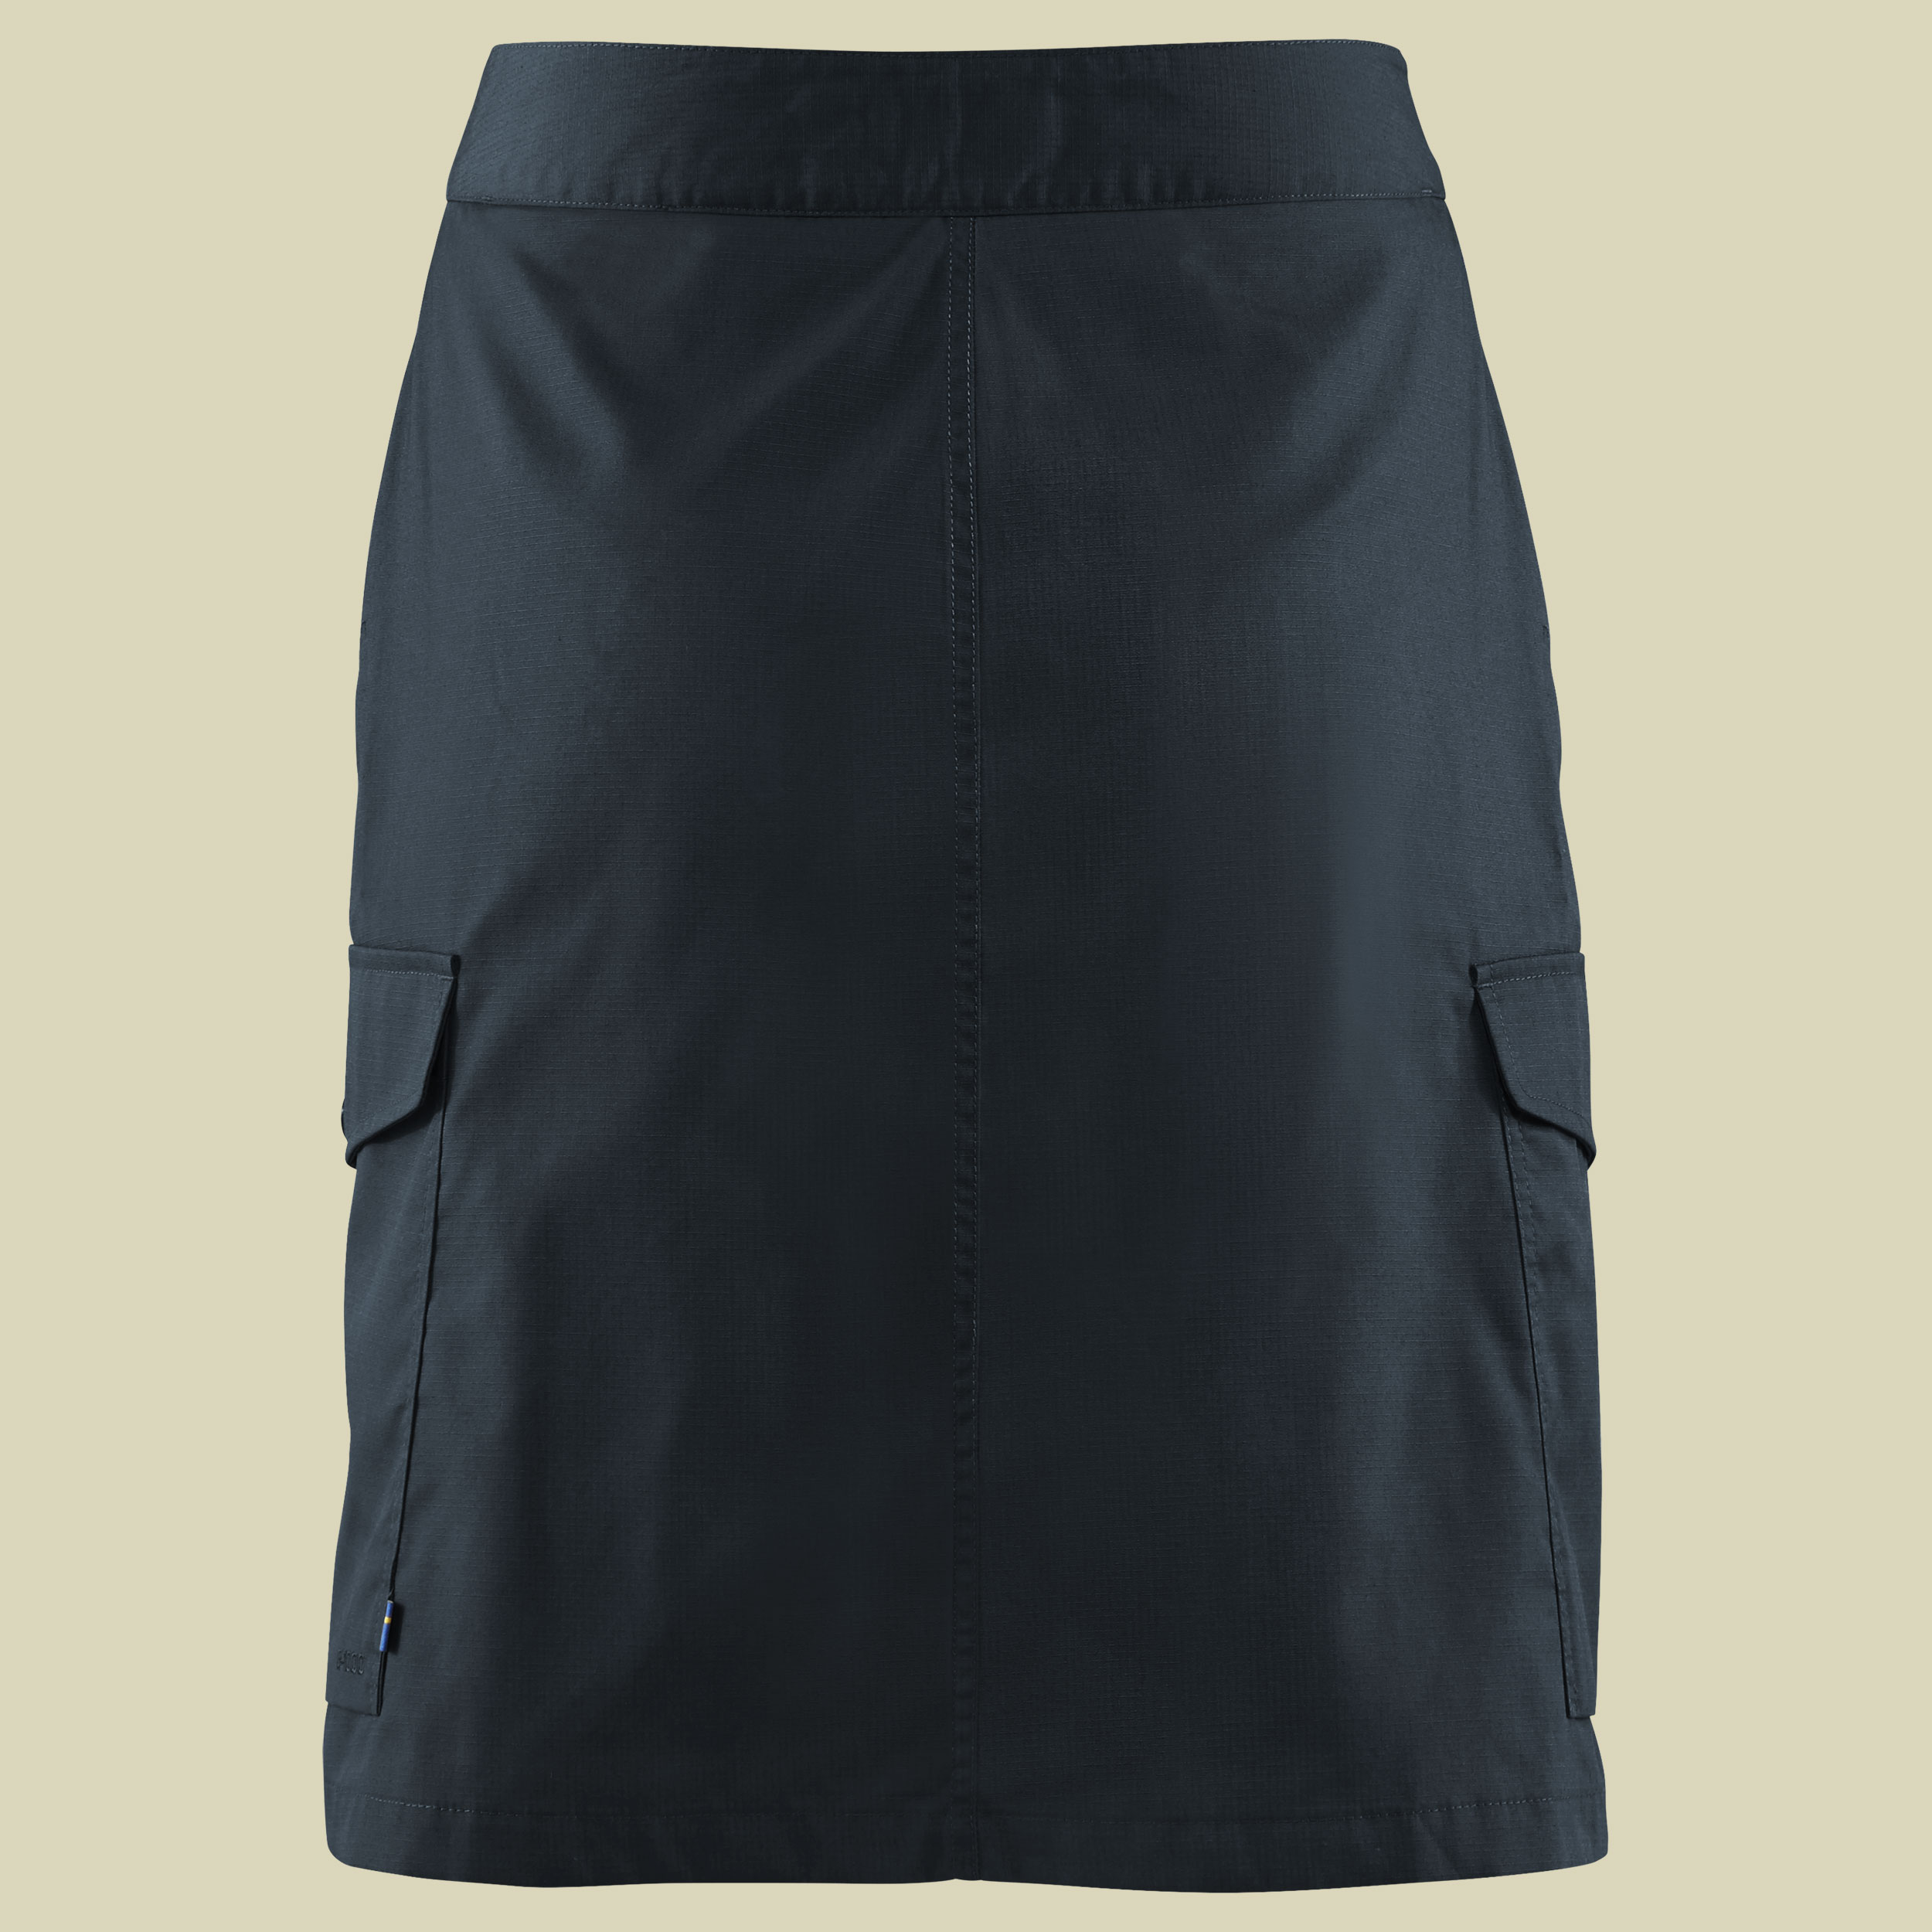 Övik Travel Skirt Women Größe 36 Farbe dark navy